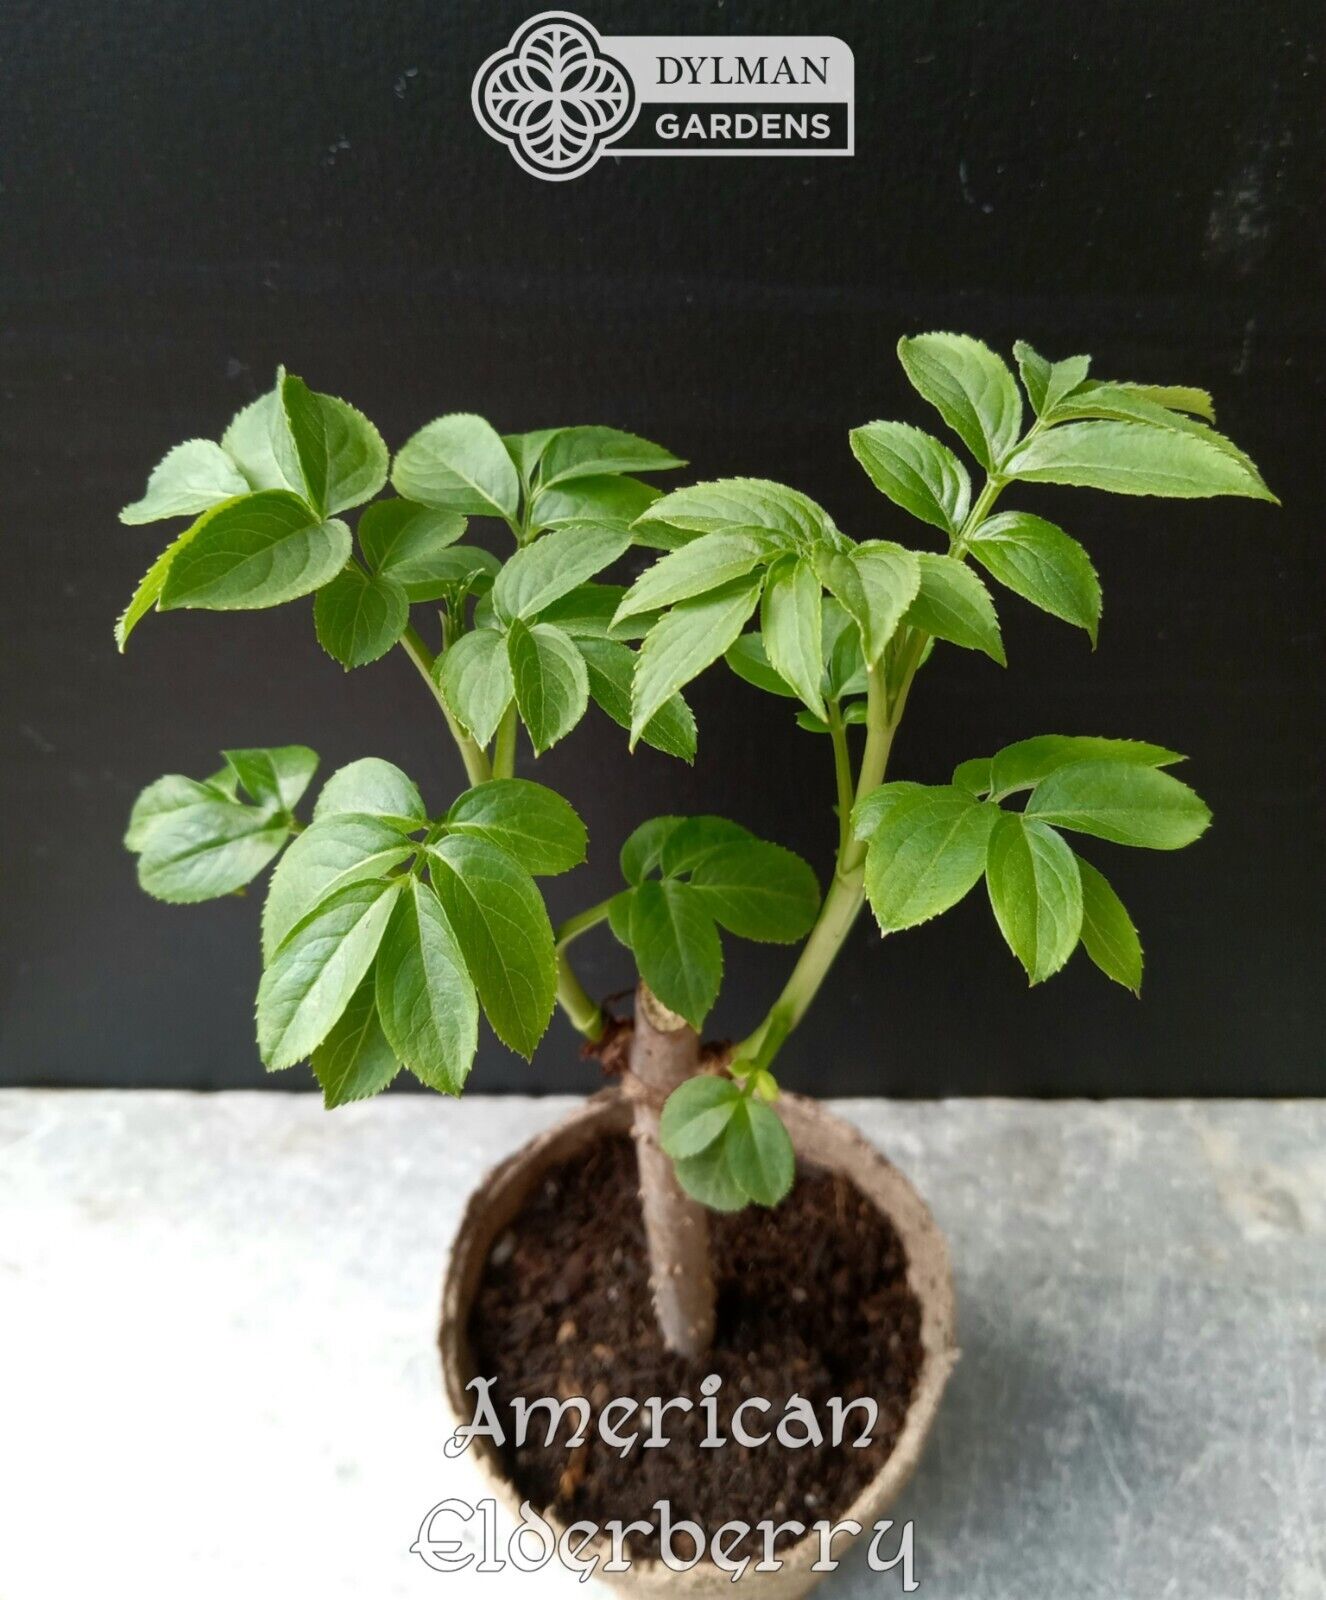 2 American Elderberry Plants - Sambucus canadensis - 2 Live Plants 4 to 6 inches